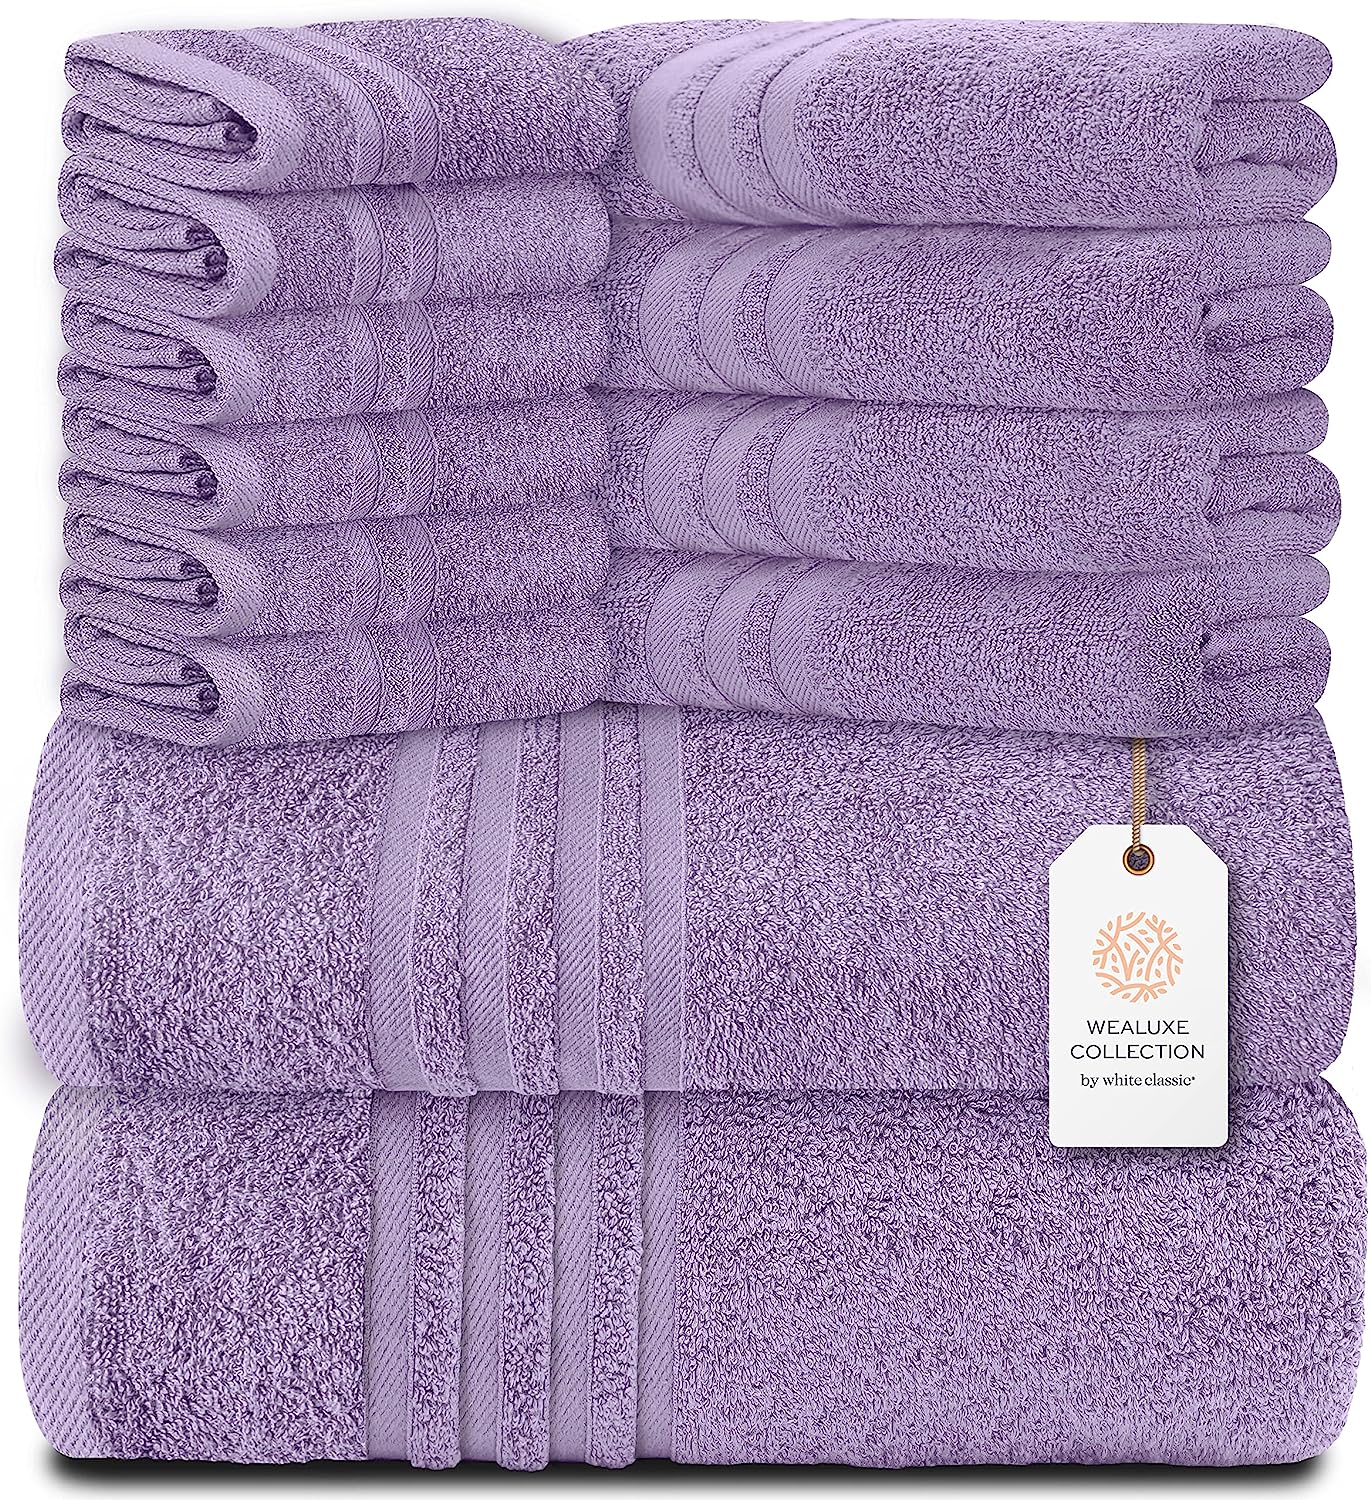 Welauxe Collection 8Pc Lavender Towel Set